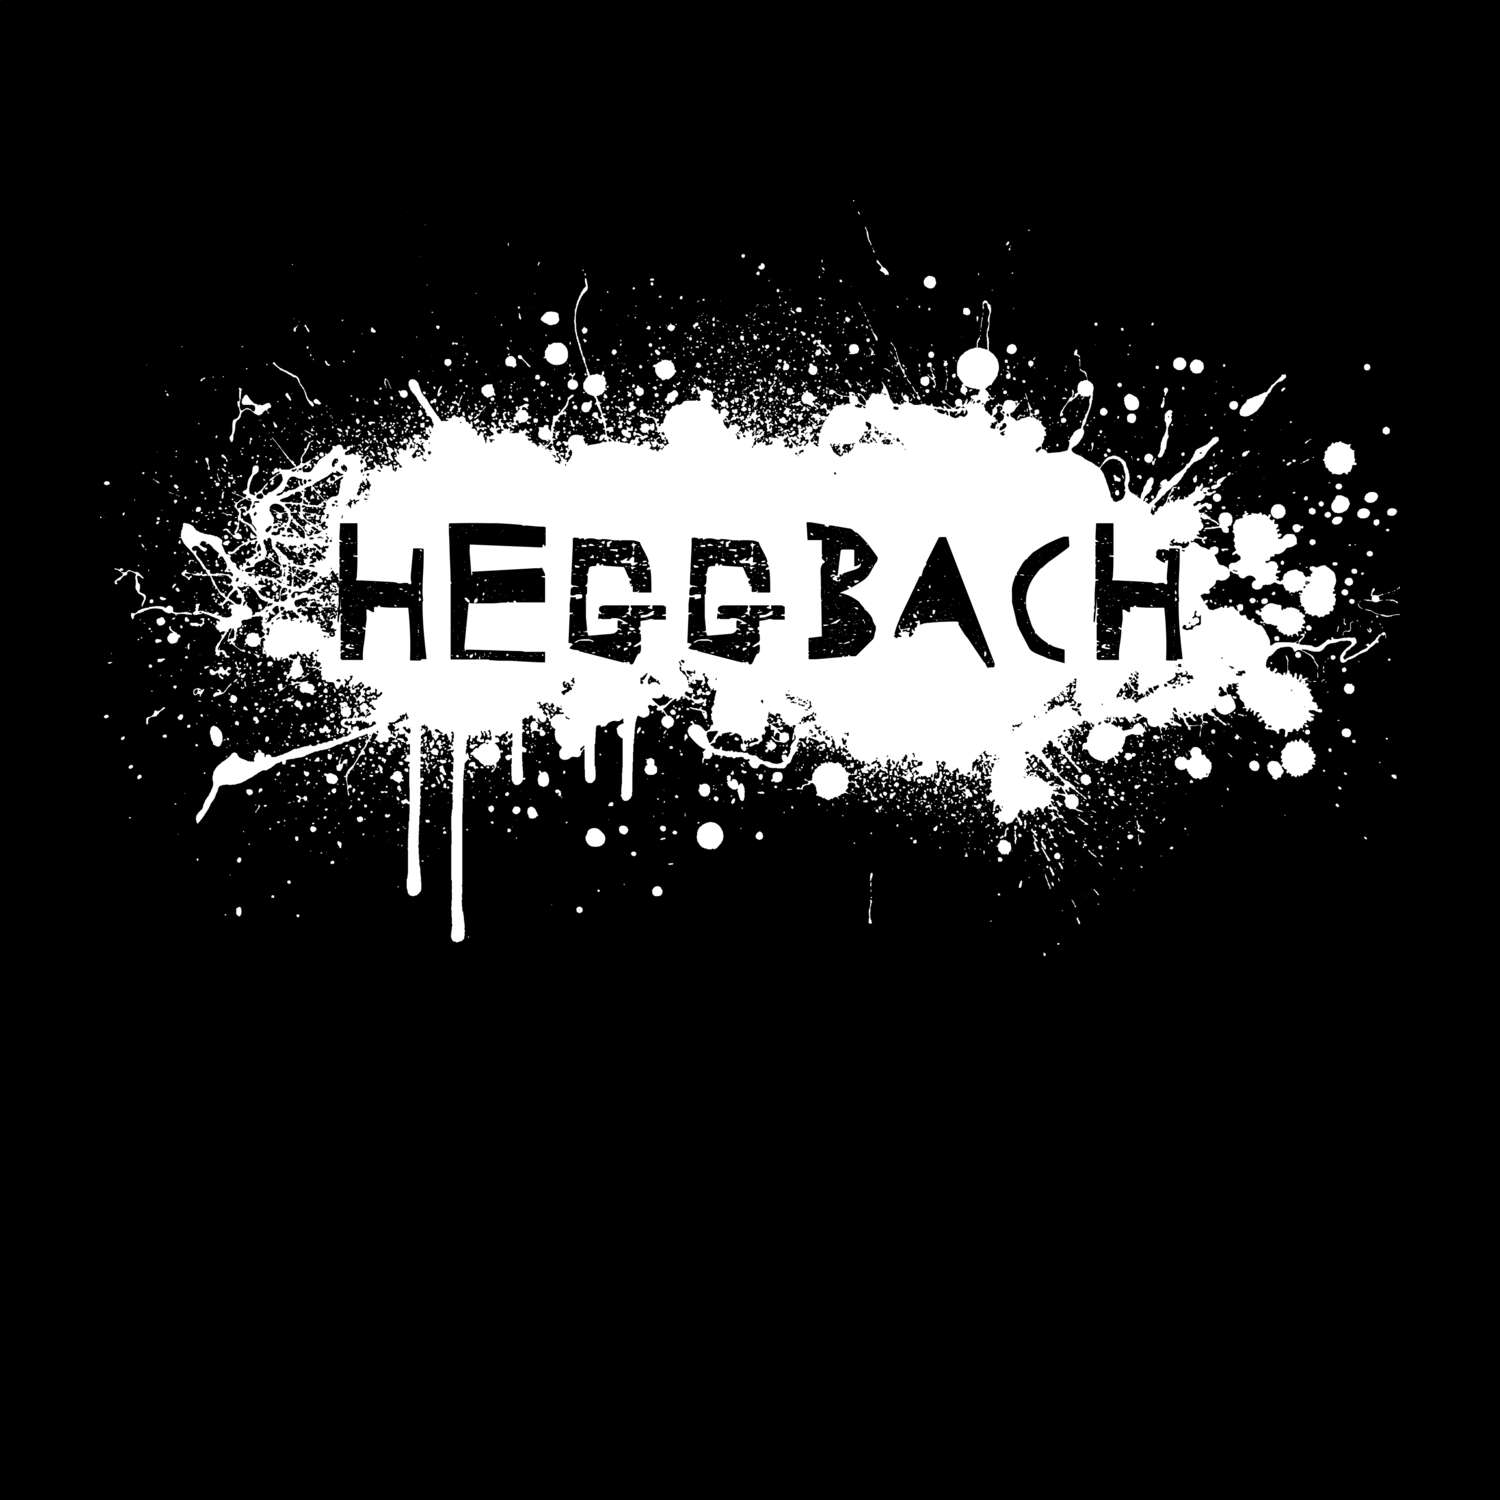 Heggbach T-Shirt »Paint Splash Punk«